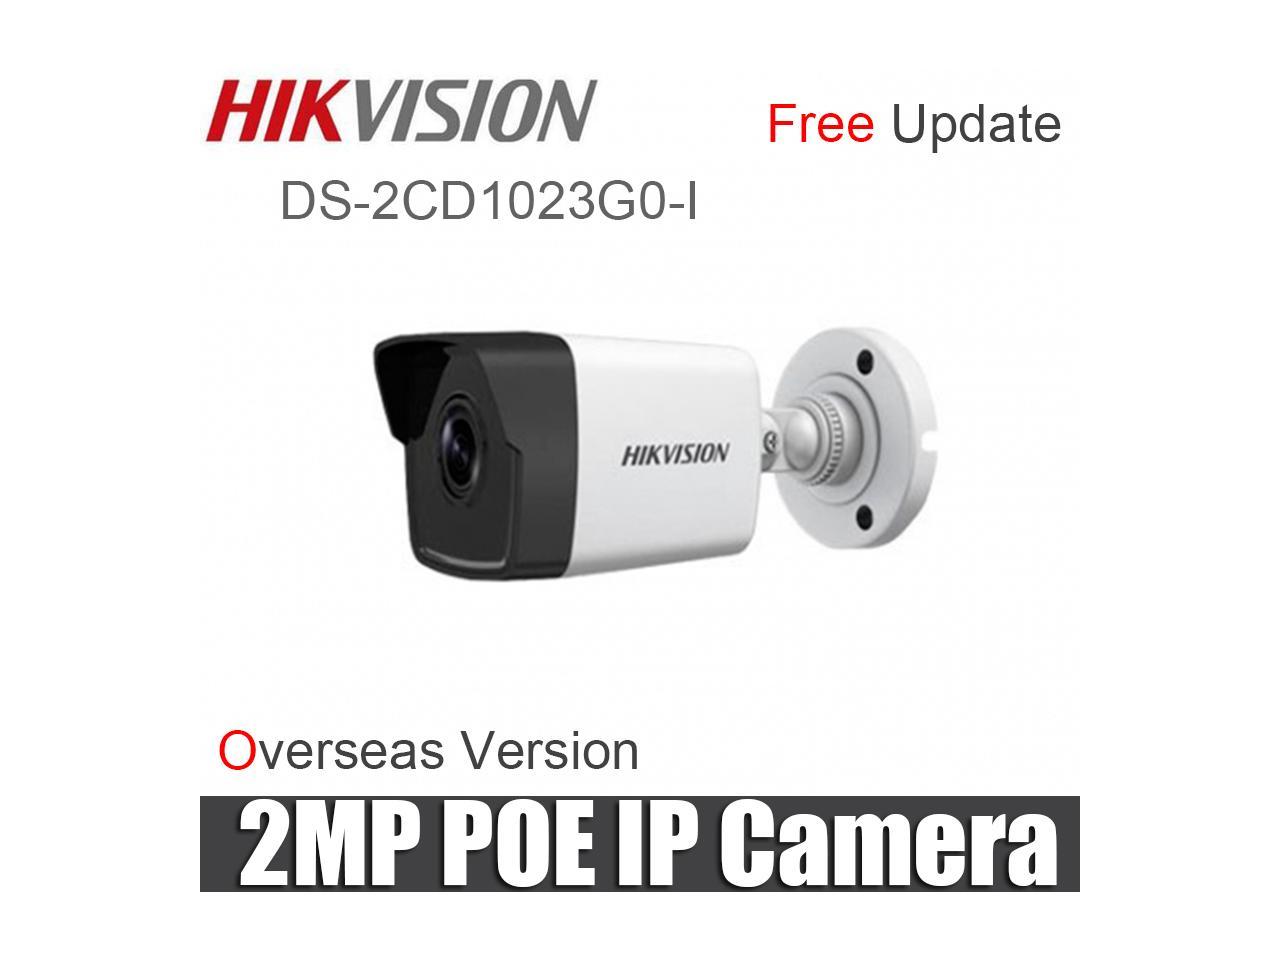 hikvision ip camera 2mp bullet